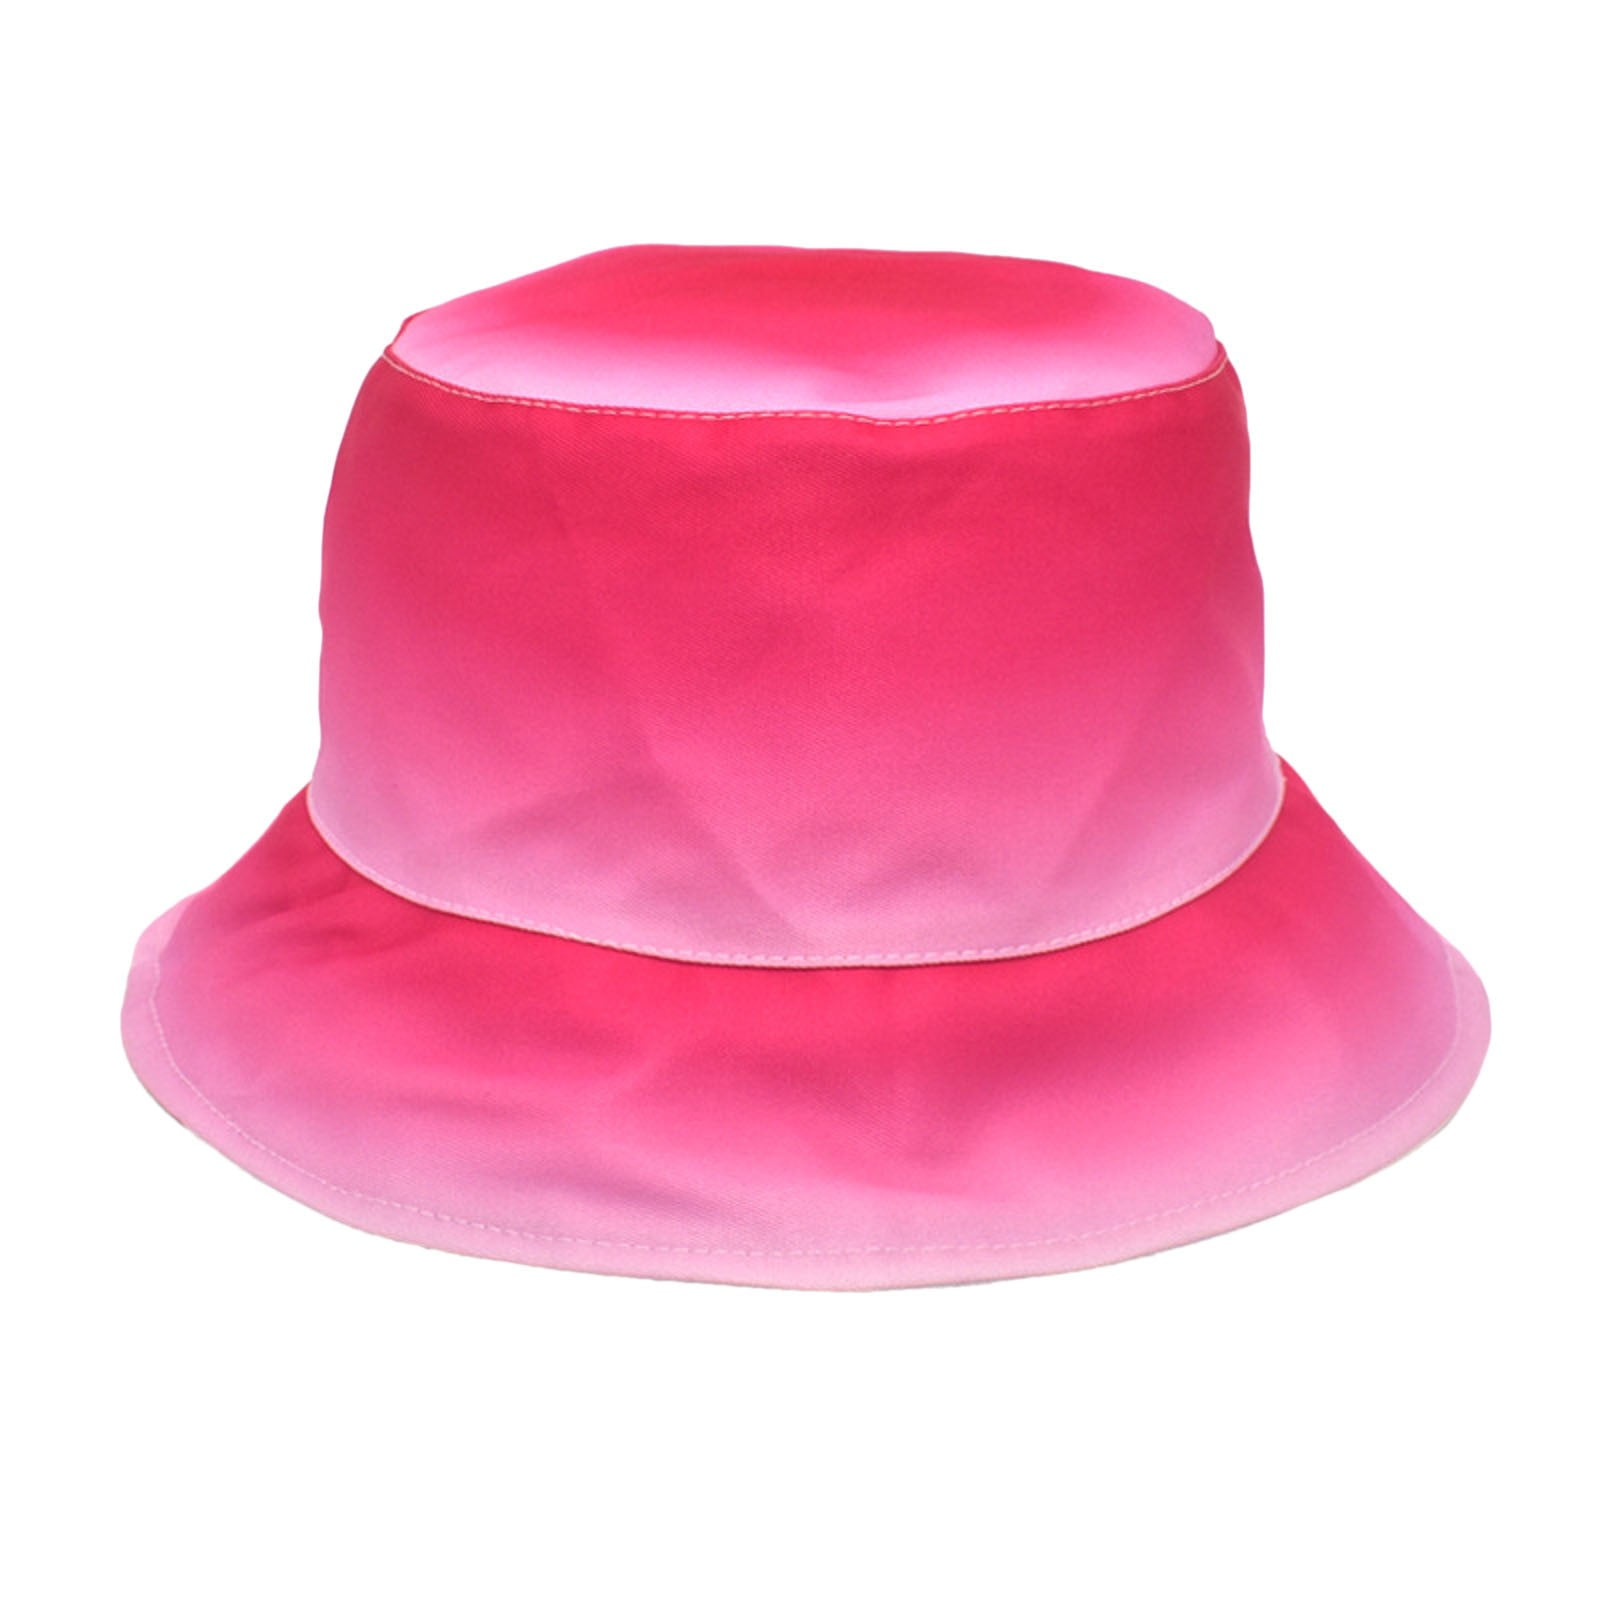 Huaai Retro Bucket Hats for Men Women Trendy Lightweight Outdoor Hot Fun  Cotton Summer Sun Beach Fishing Cap Hot Pink